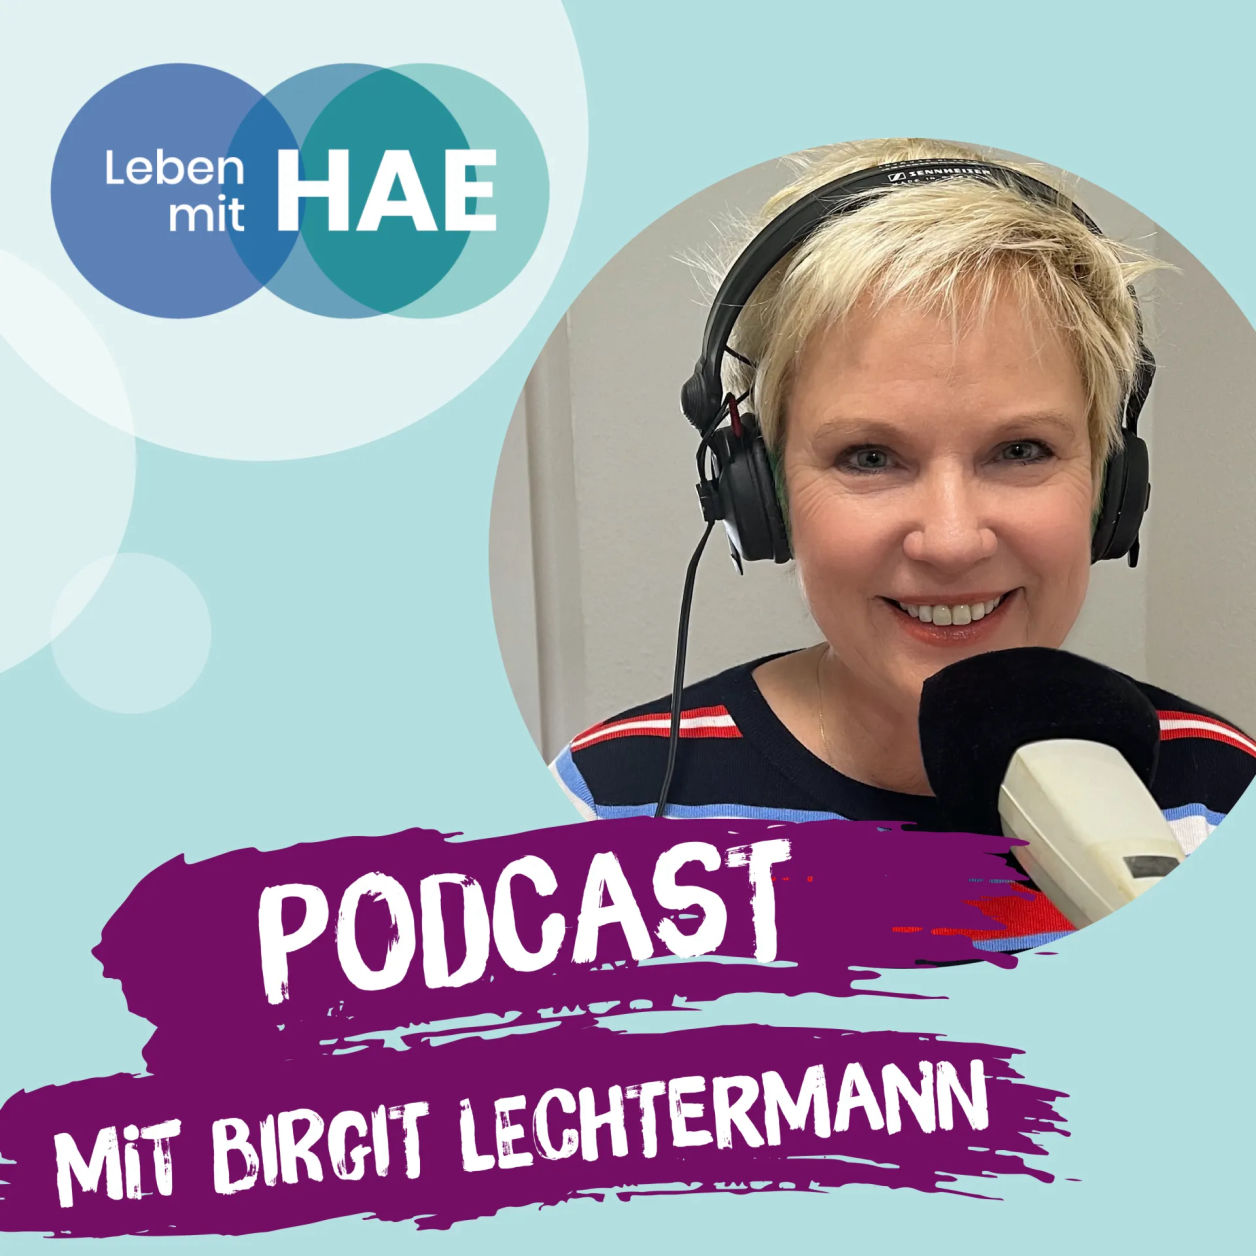 Podcast mit Birgit Lechtermann